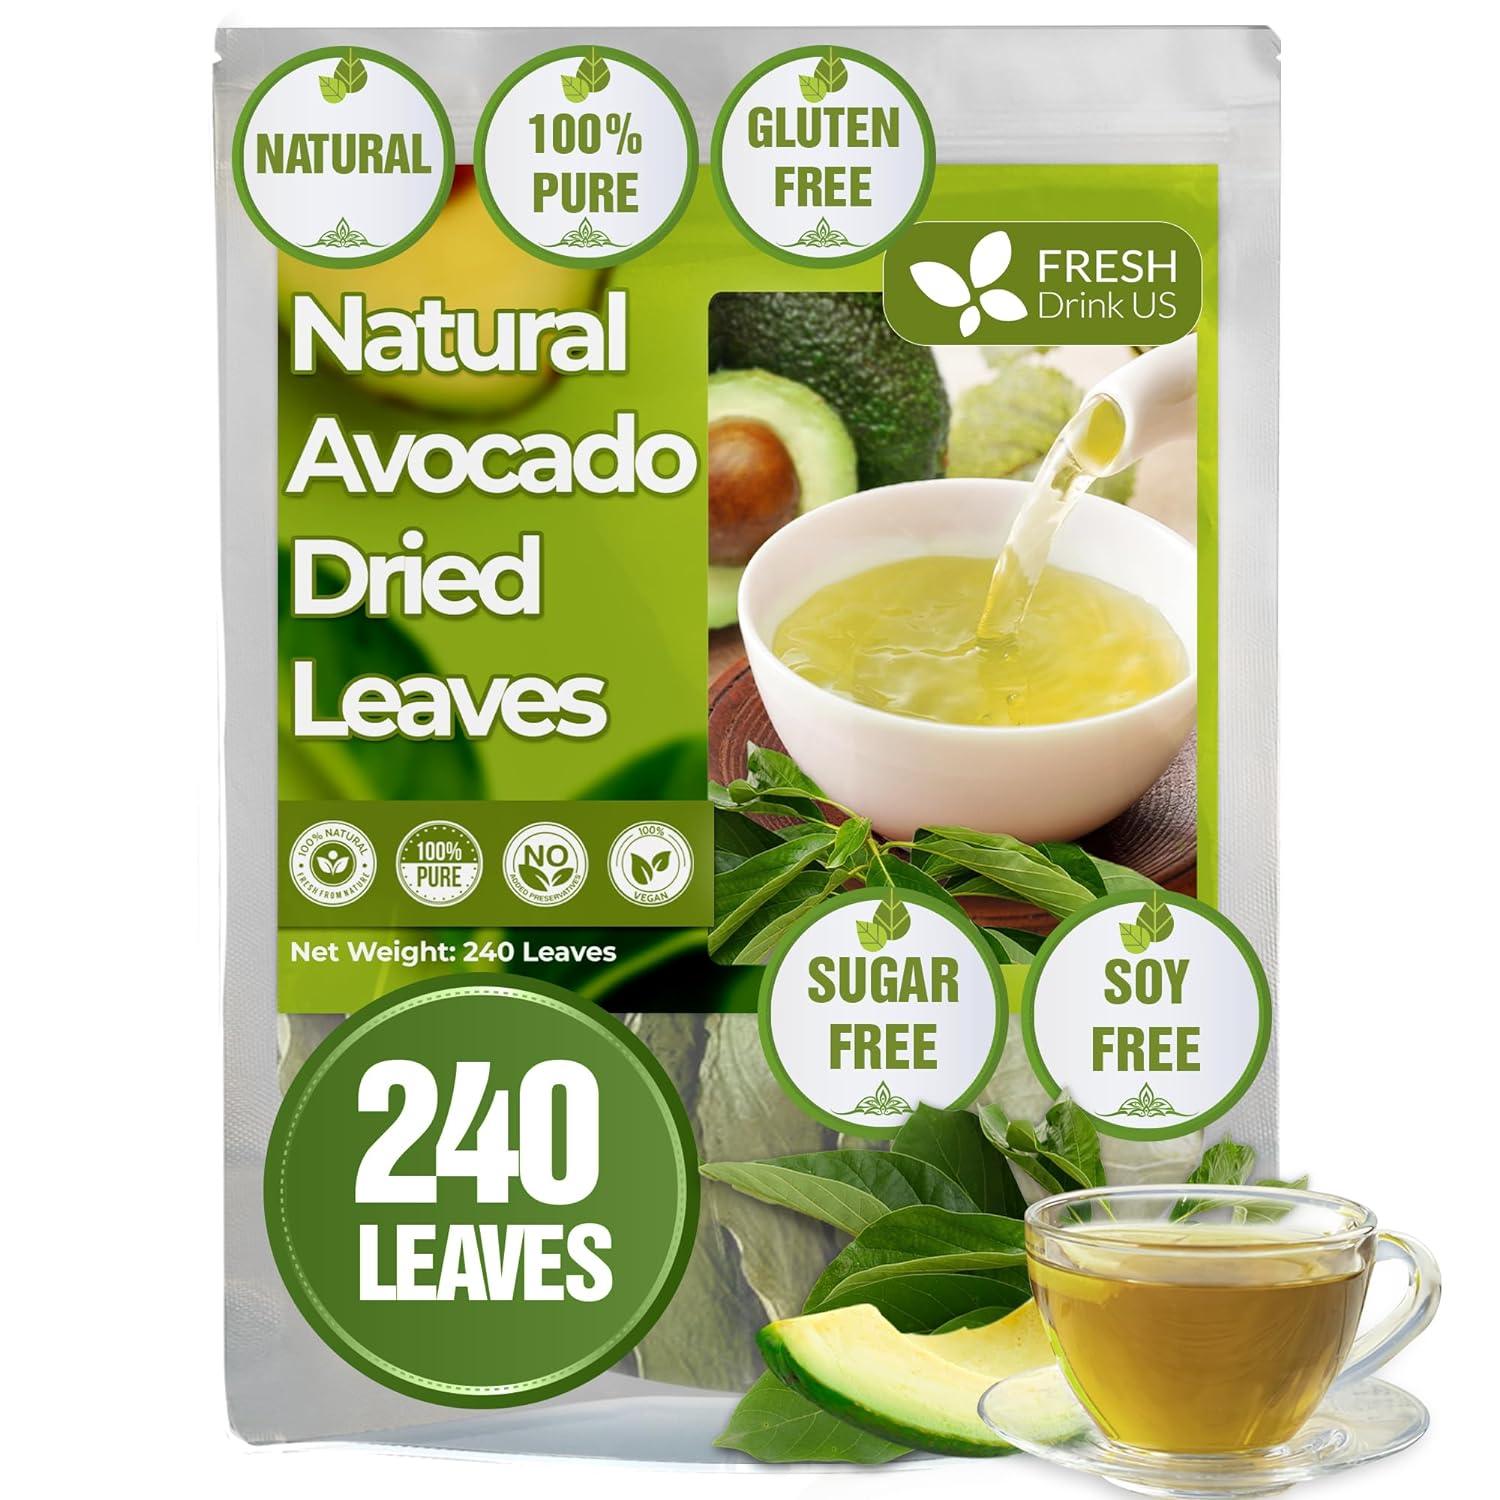 Natural Avocado Whole Leaves Dried, Tea Bags, 100% Pure from Avocado Leaves, Avocado Leaf Tea, Hojas de Aguacate Seca, No Additives, No Caffeine, Vegan - FreshDrinkUS - Natural and Premium Herbal Tea